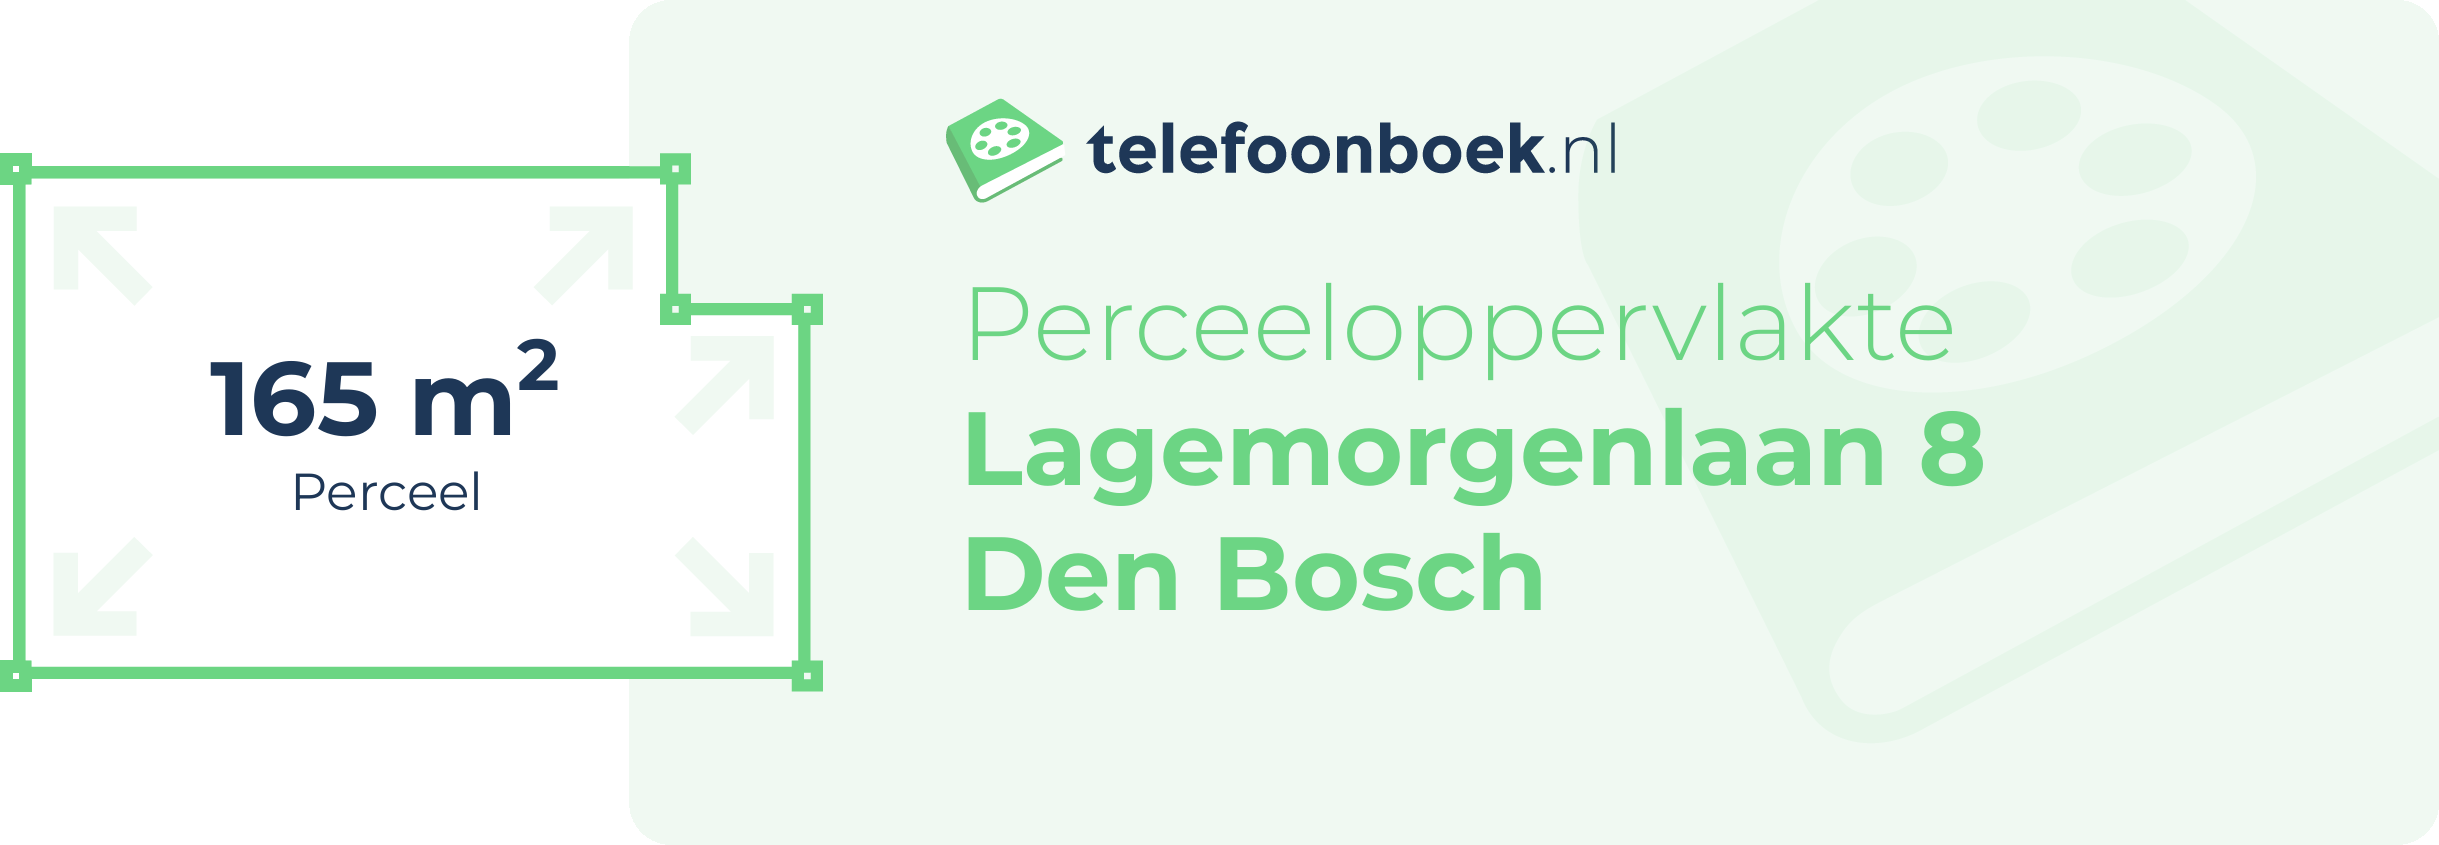 Perceeloppervlakte Lagemorgenlaan 8 Den Bosch